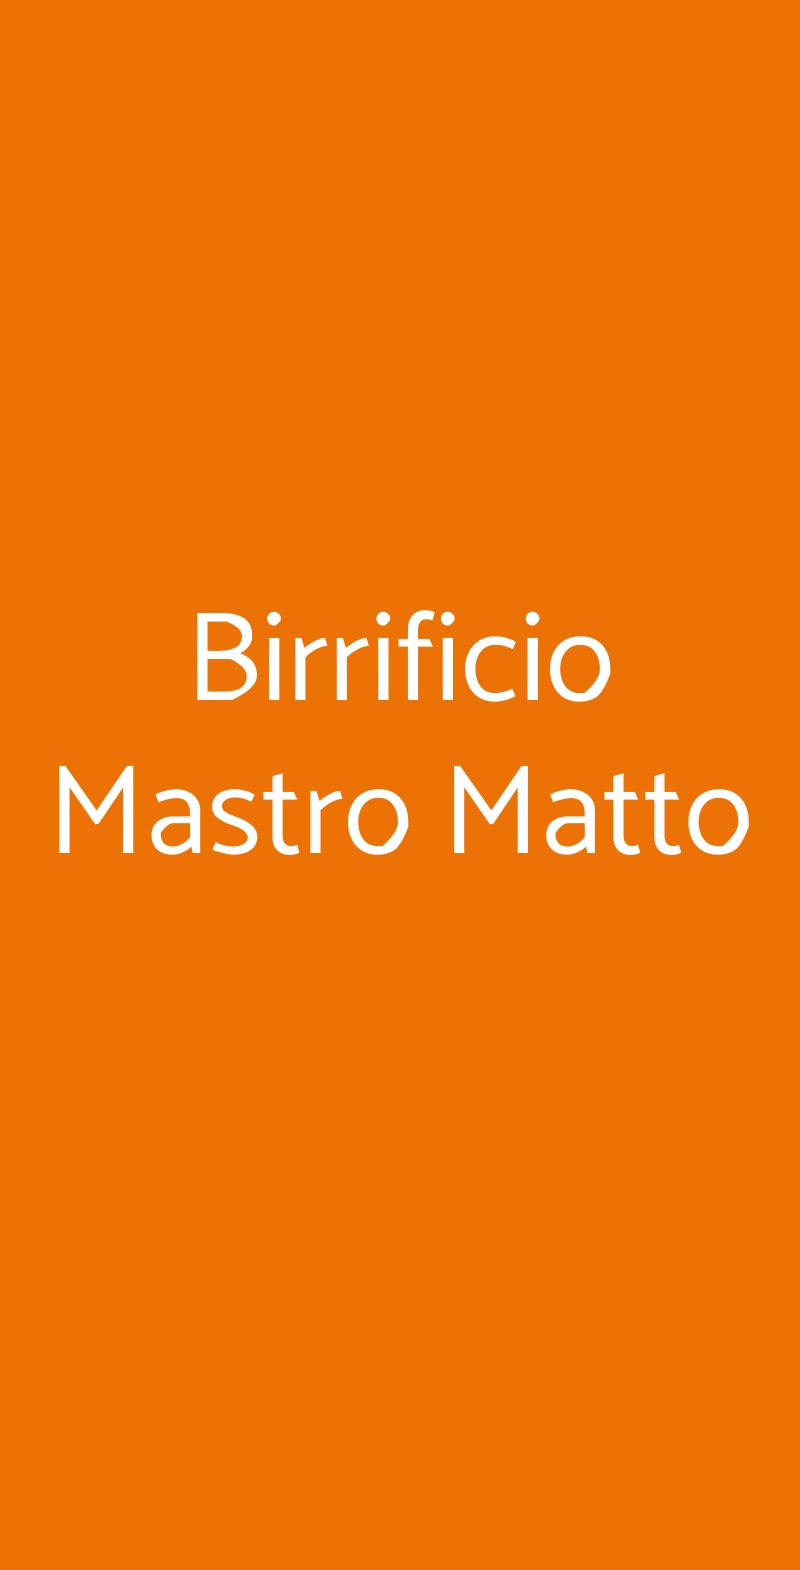 Birrificio Mastro Matto Verona menù 1 pagina